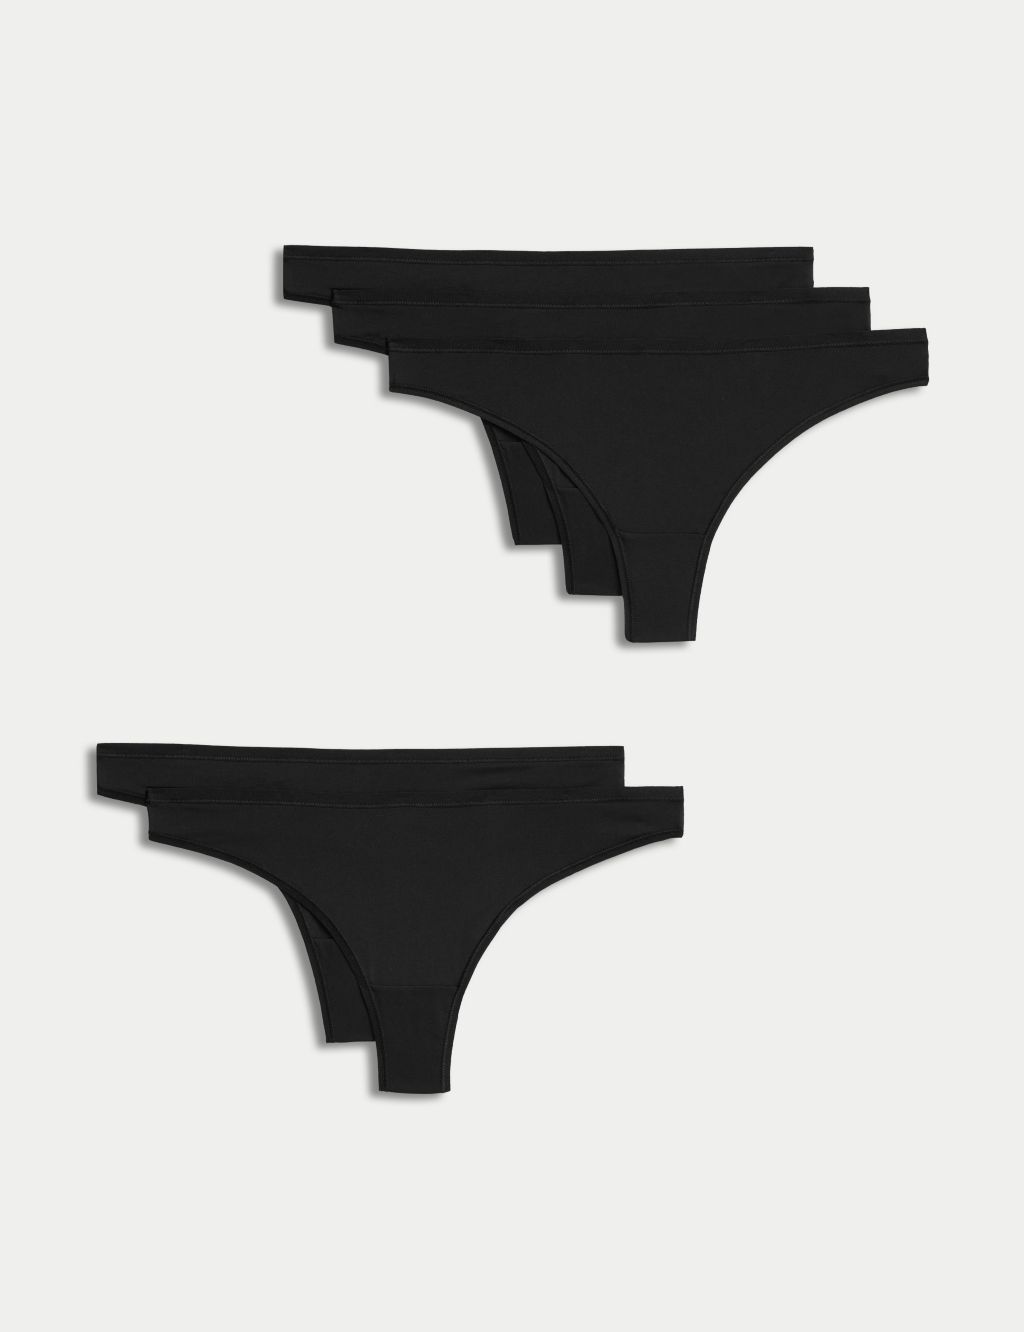 Women's Black Underwear sold by Intellectual Lyricist, SKU 661704